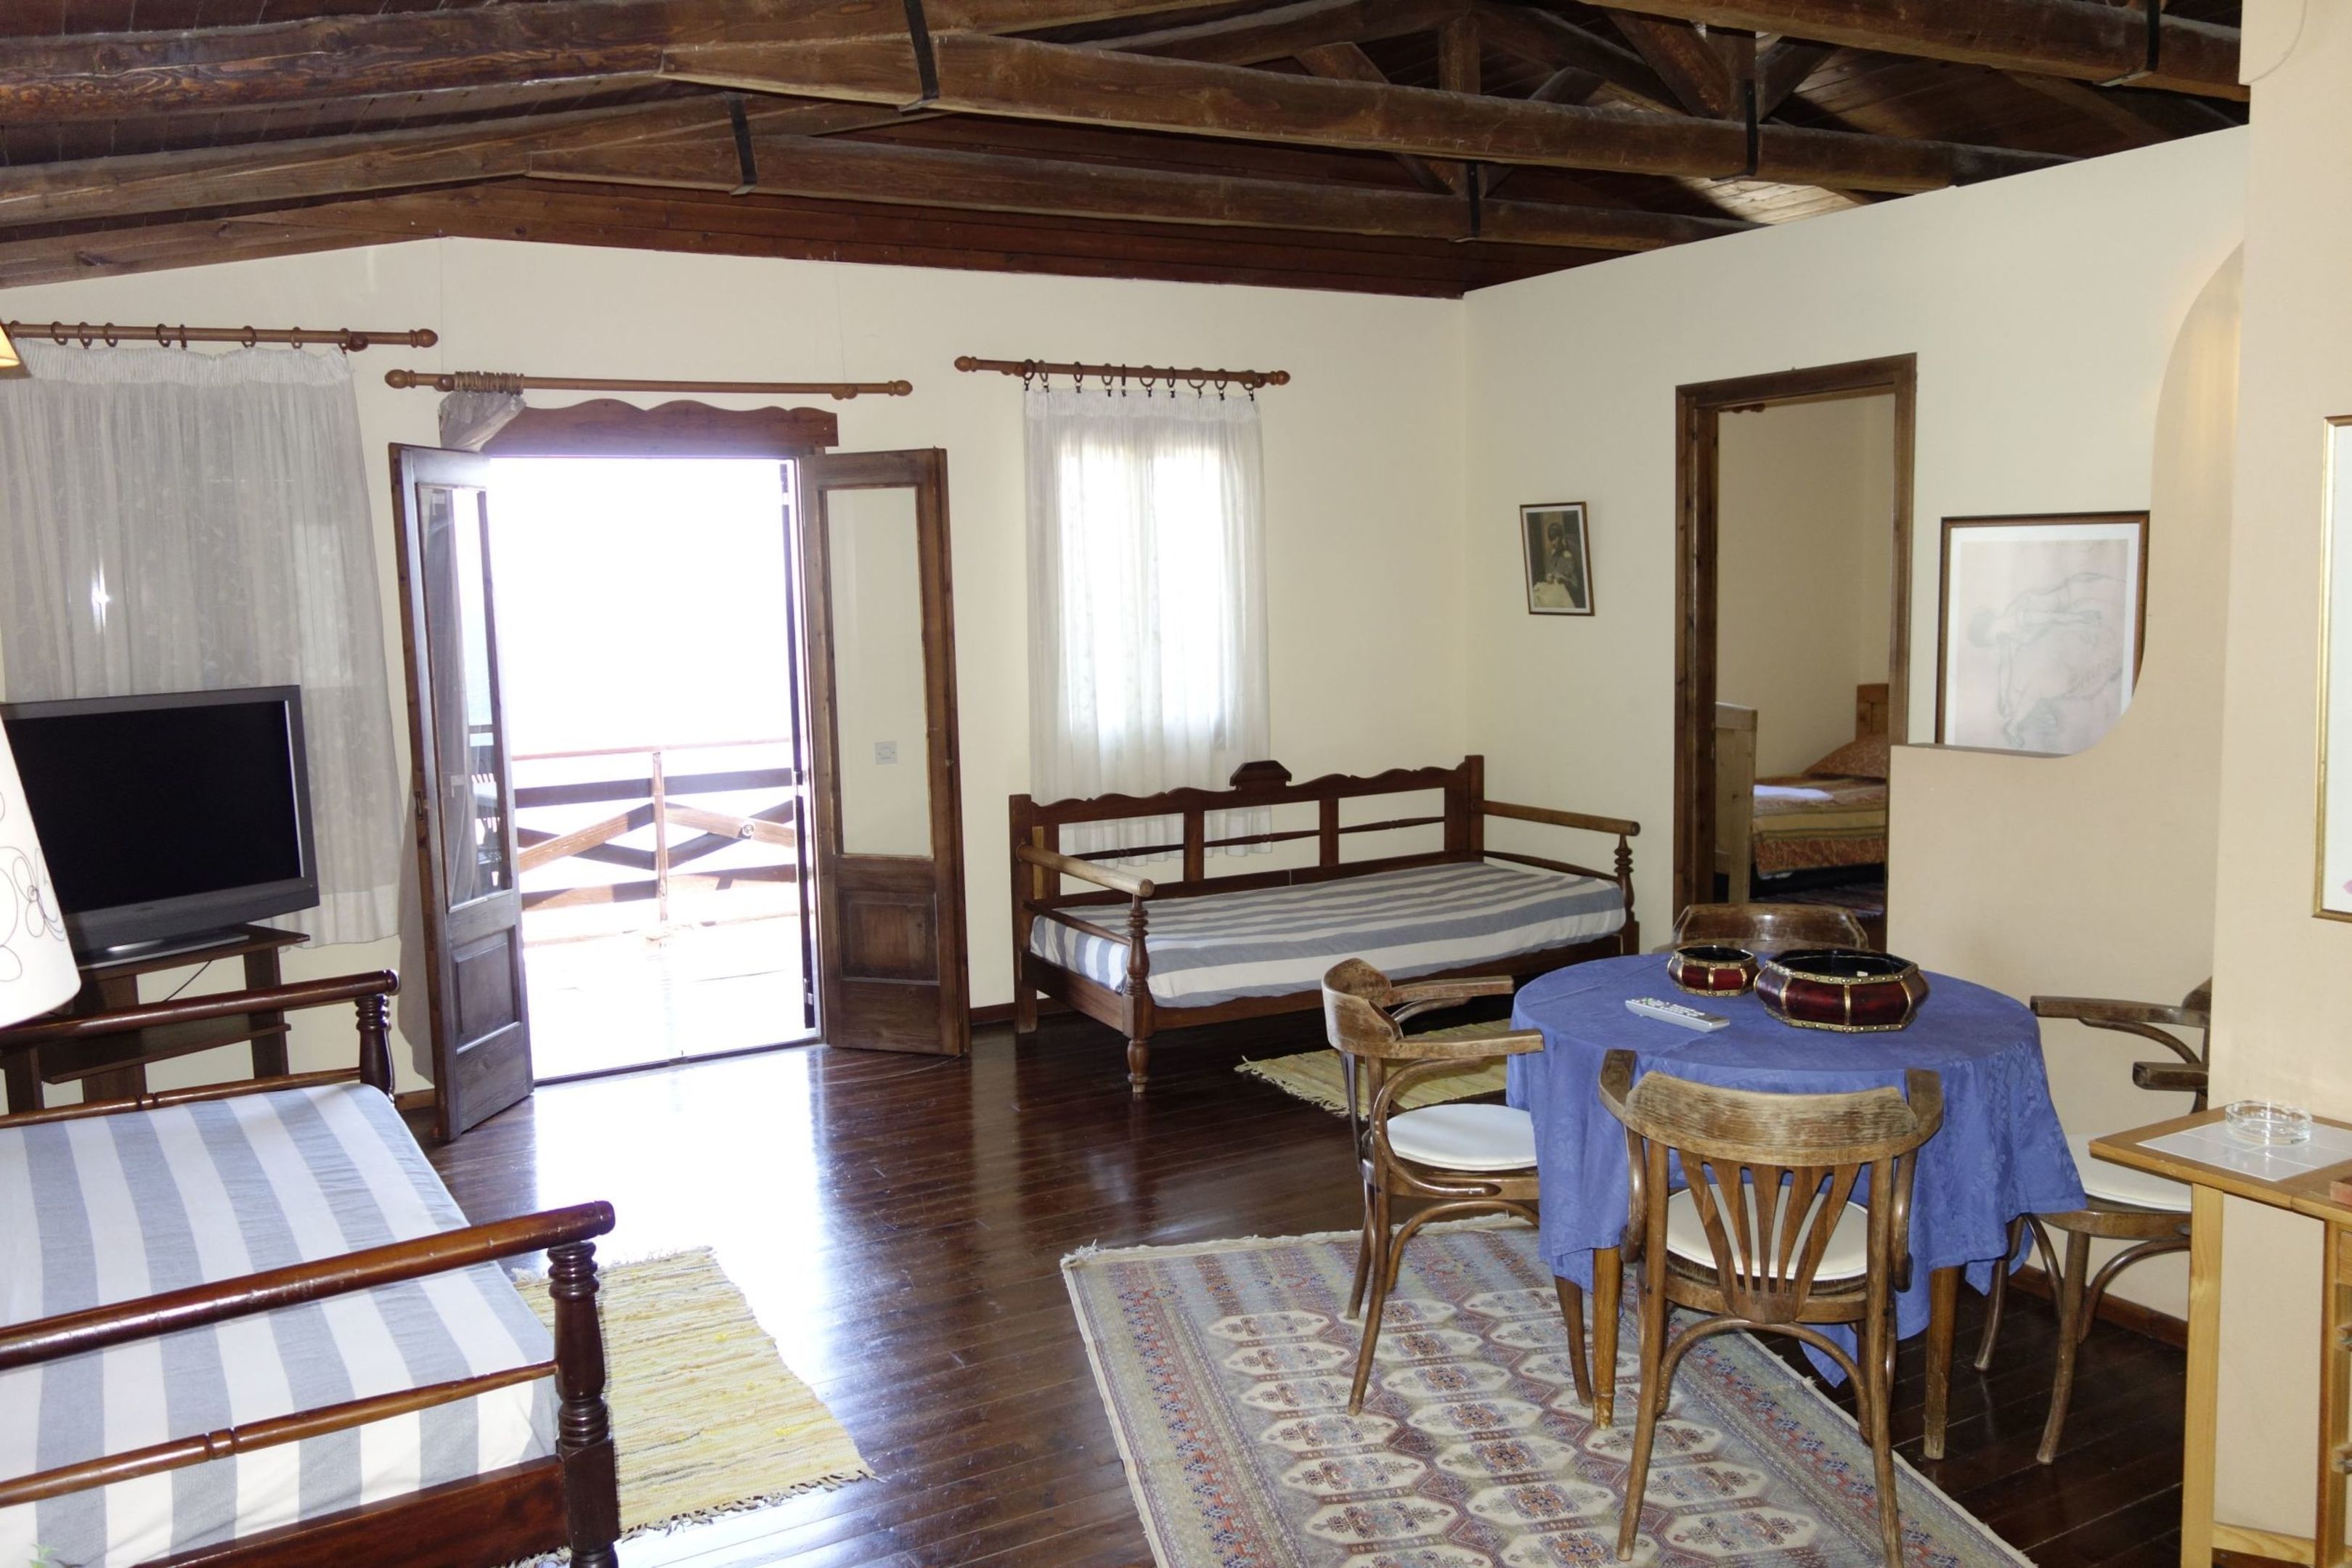 Cretan Village Hotel